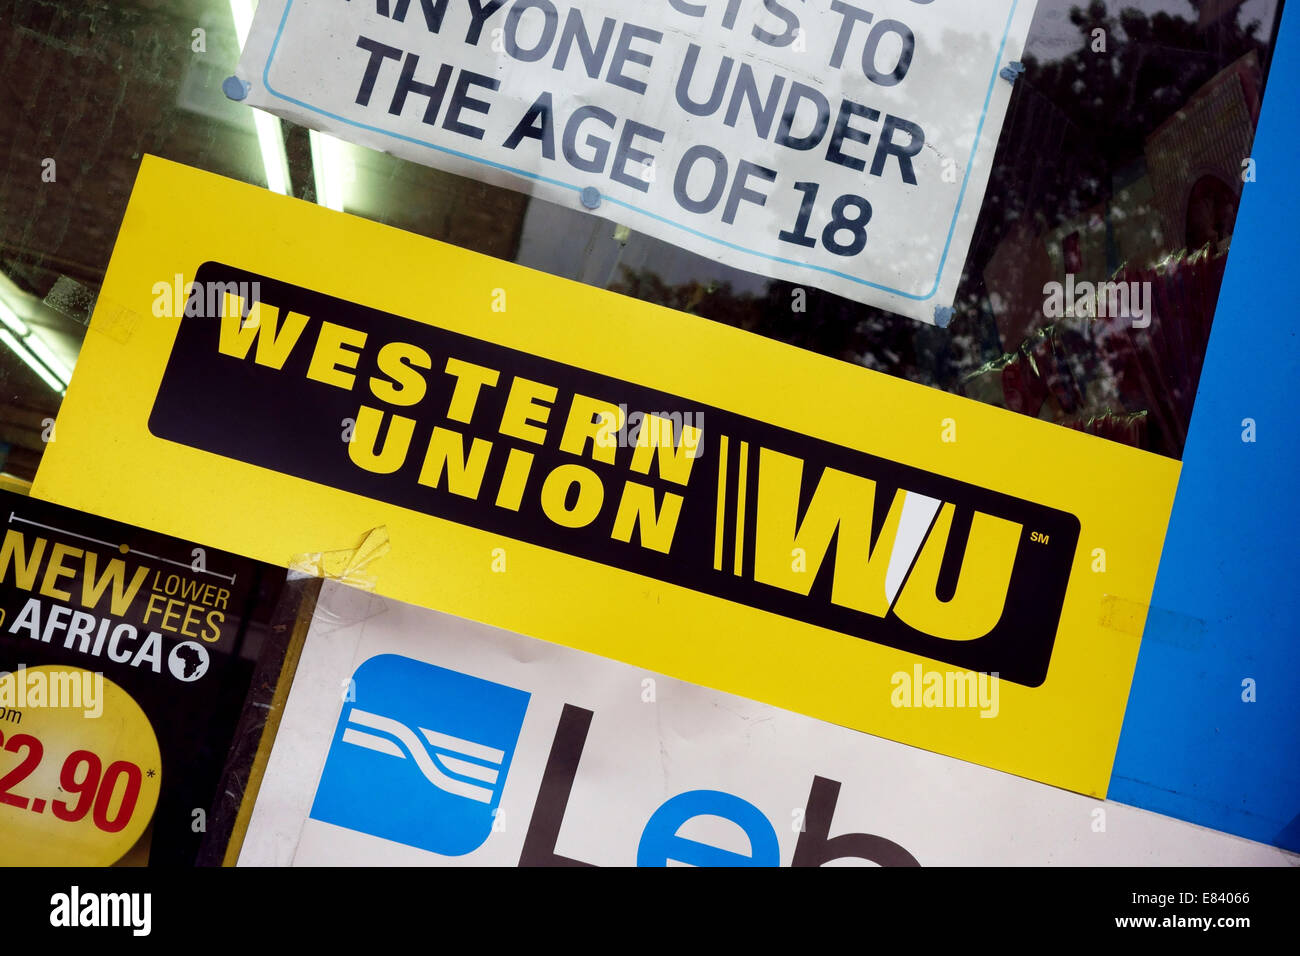 Western Union money transfer sign in shop window, London Stock Photo